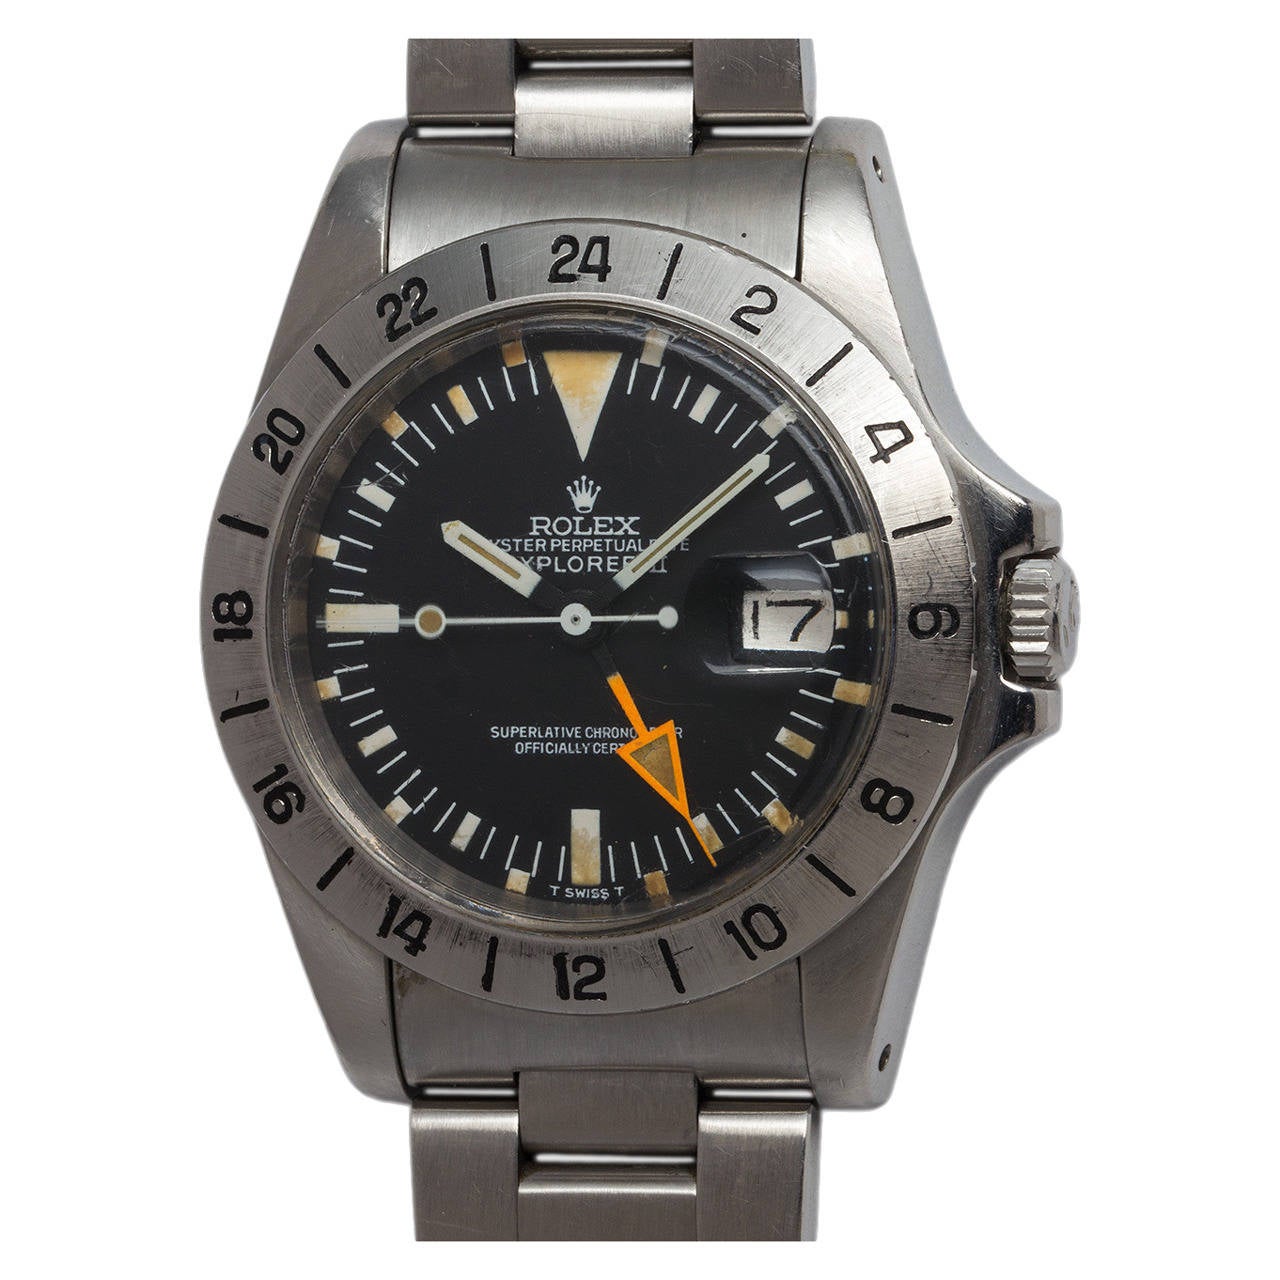 Rolex Stainless Steel Explorer II Chronometer Wristwatch Ref 1655